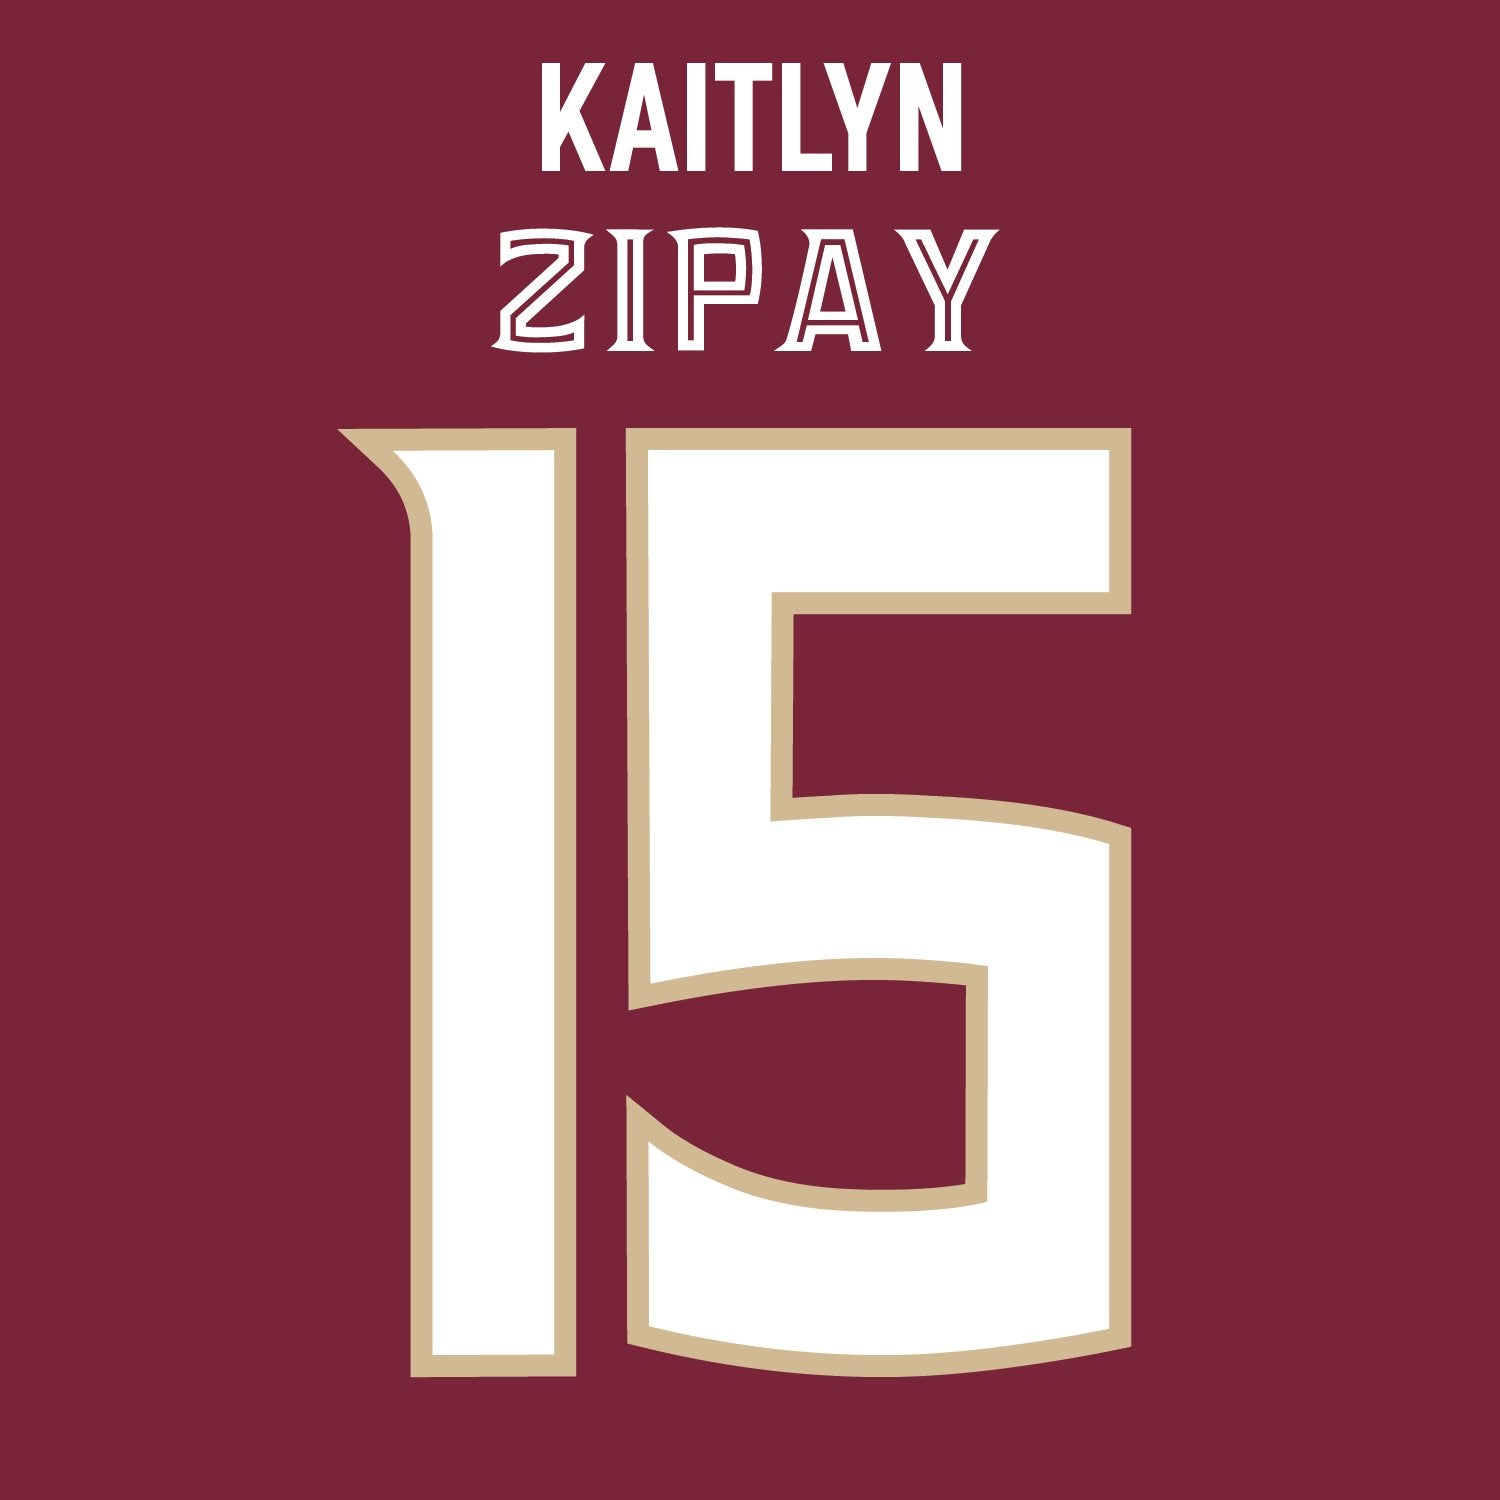 Kaitlyn Zipay | #15